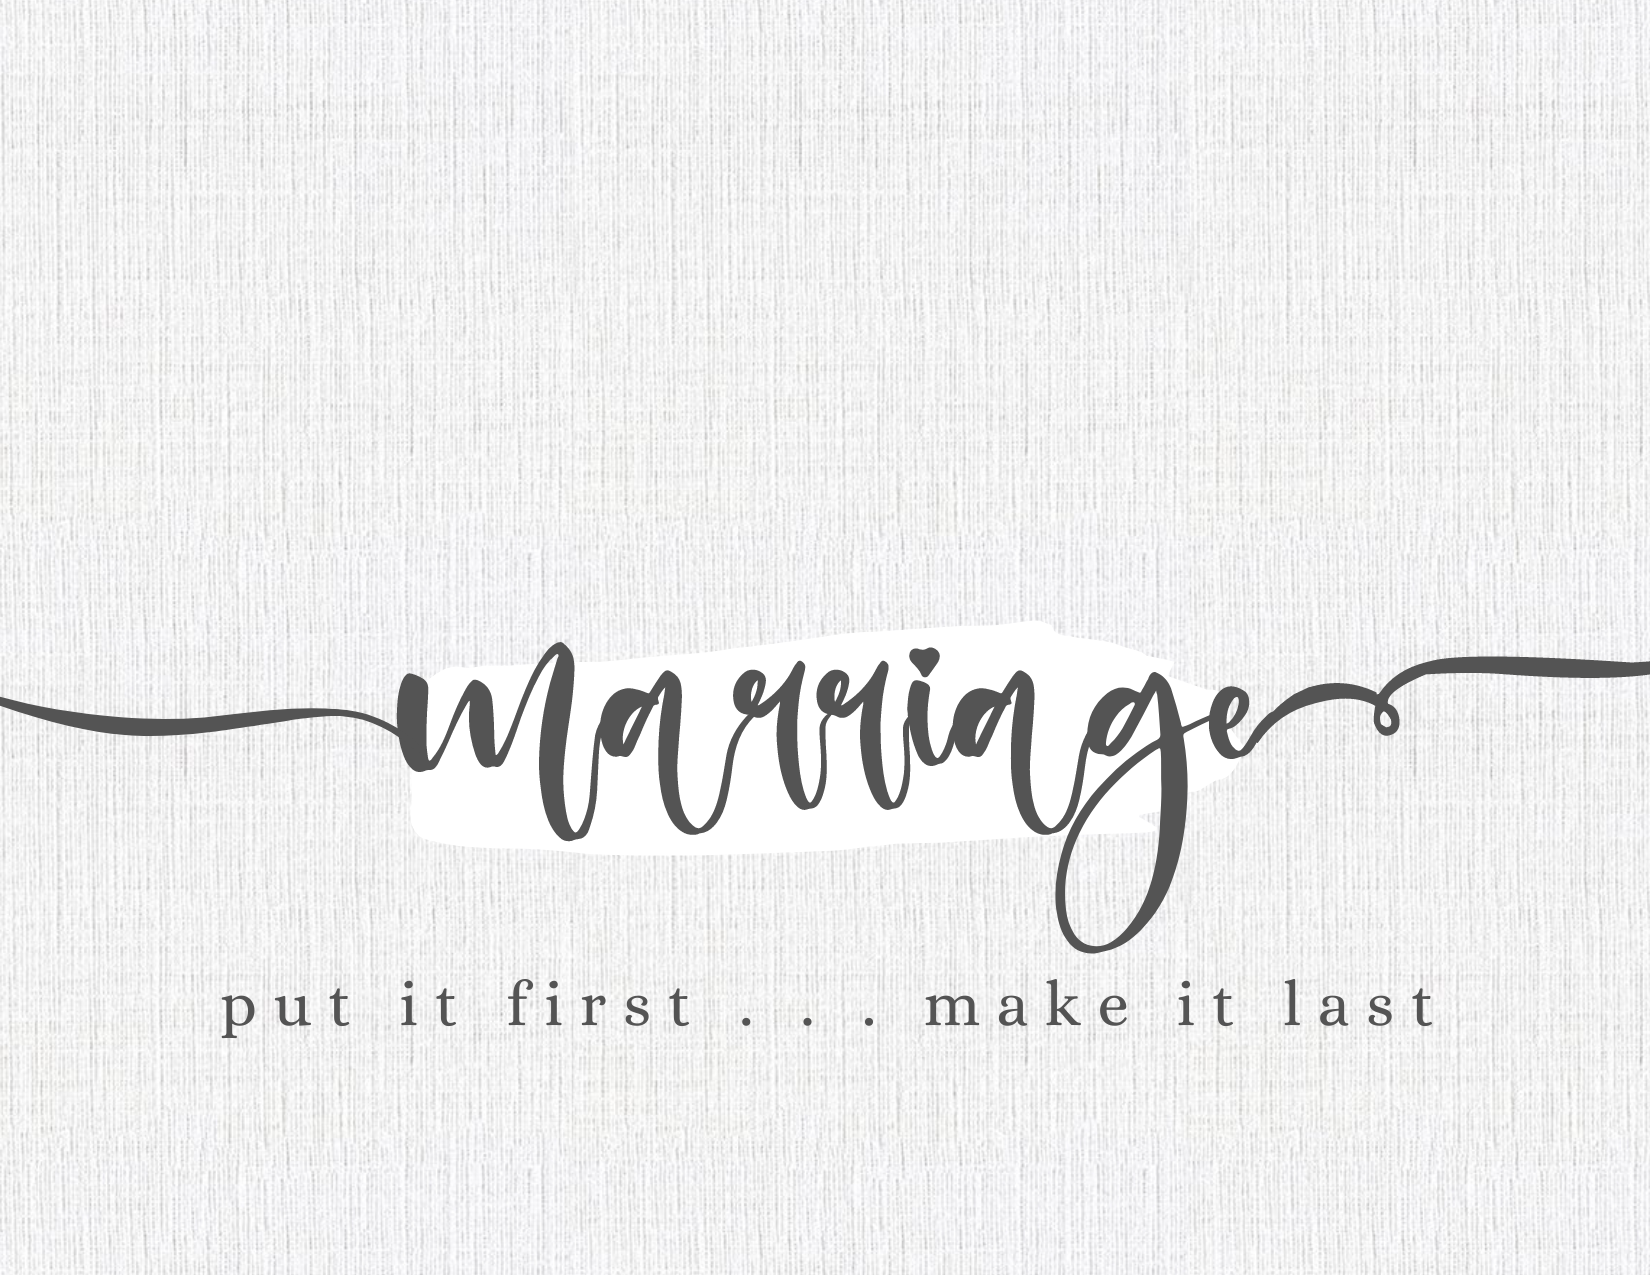 Marriage: put it first - make it last